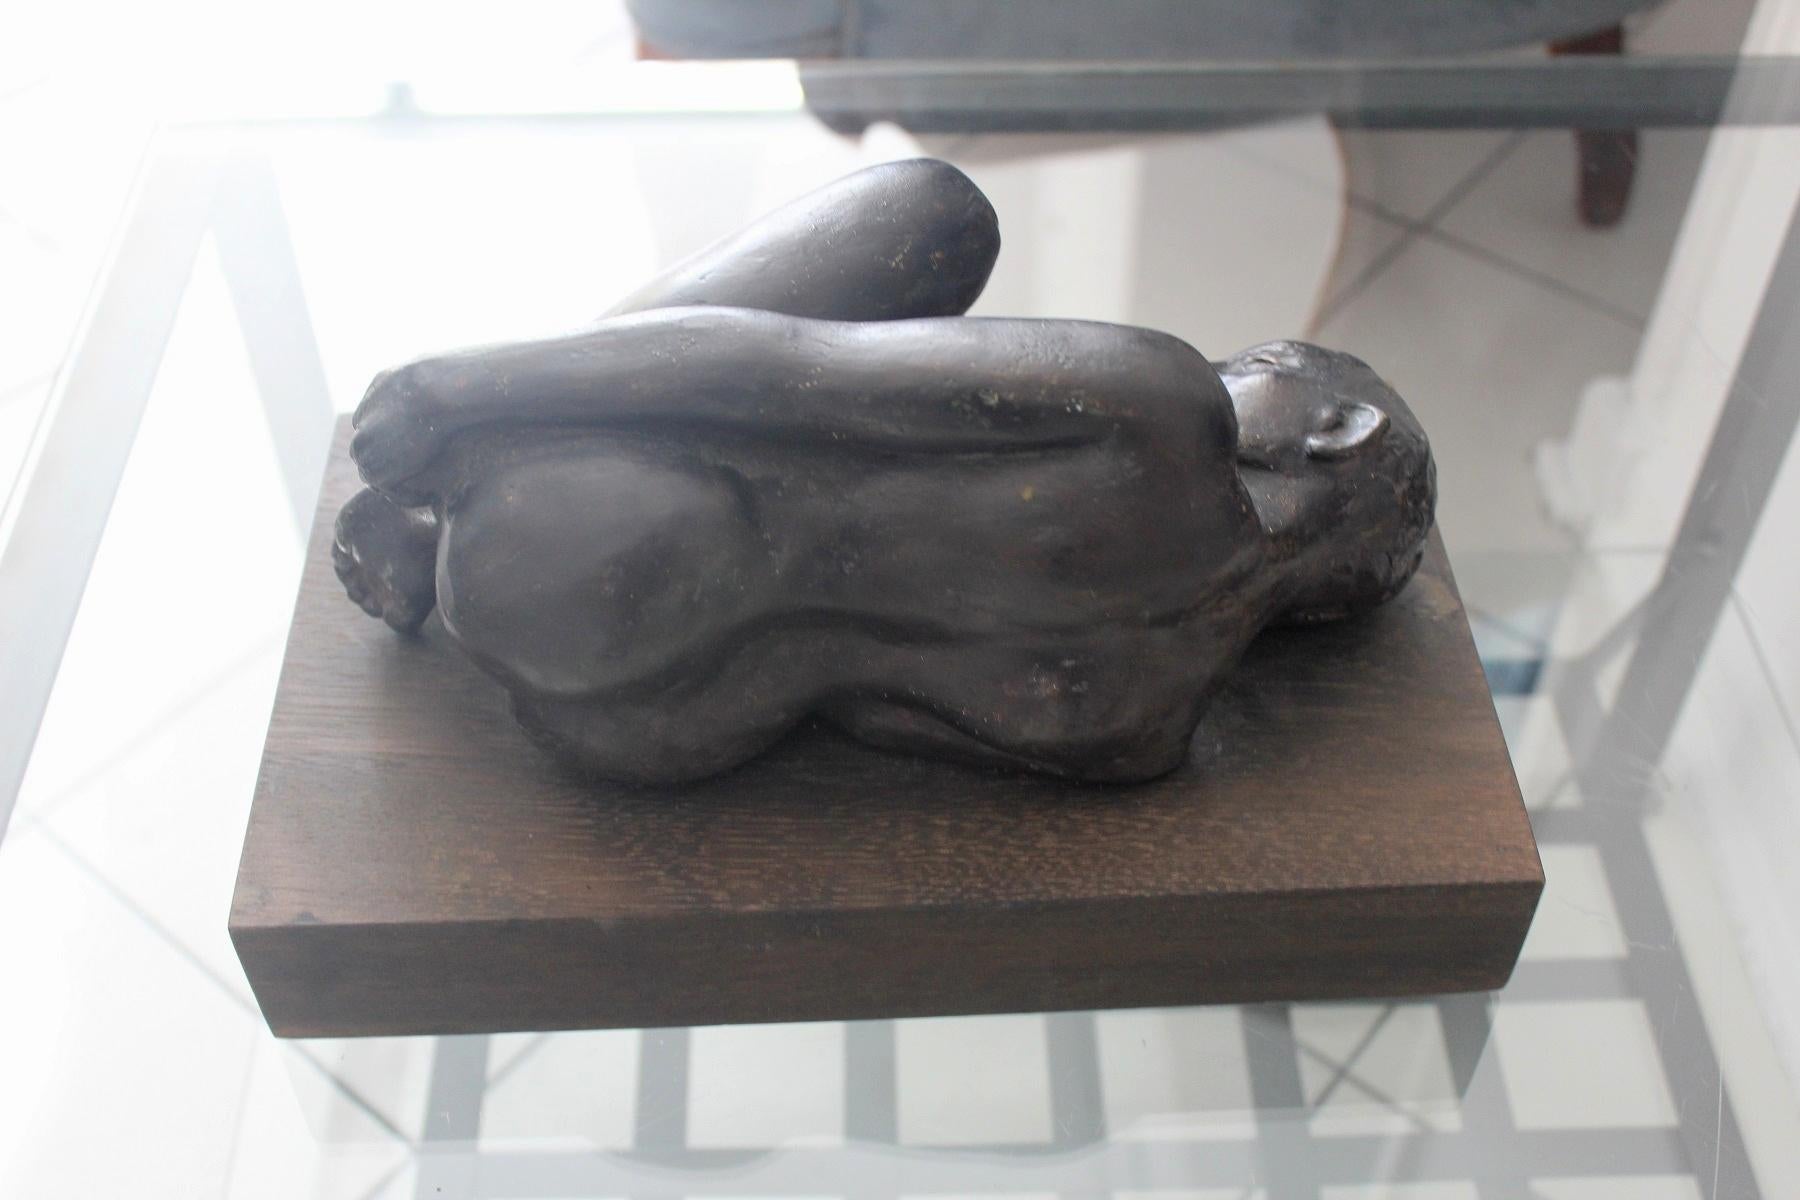 Nude - XXI century, Bronze figurative sculpture - Other Art Style Sculpture by Ryszard Piotrowski